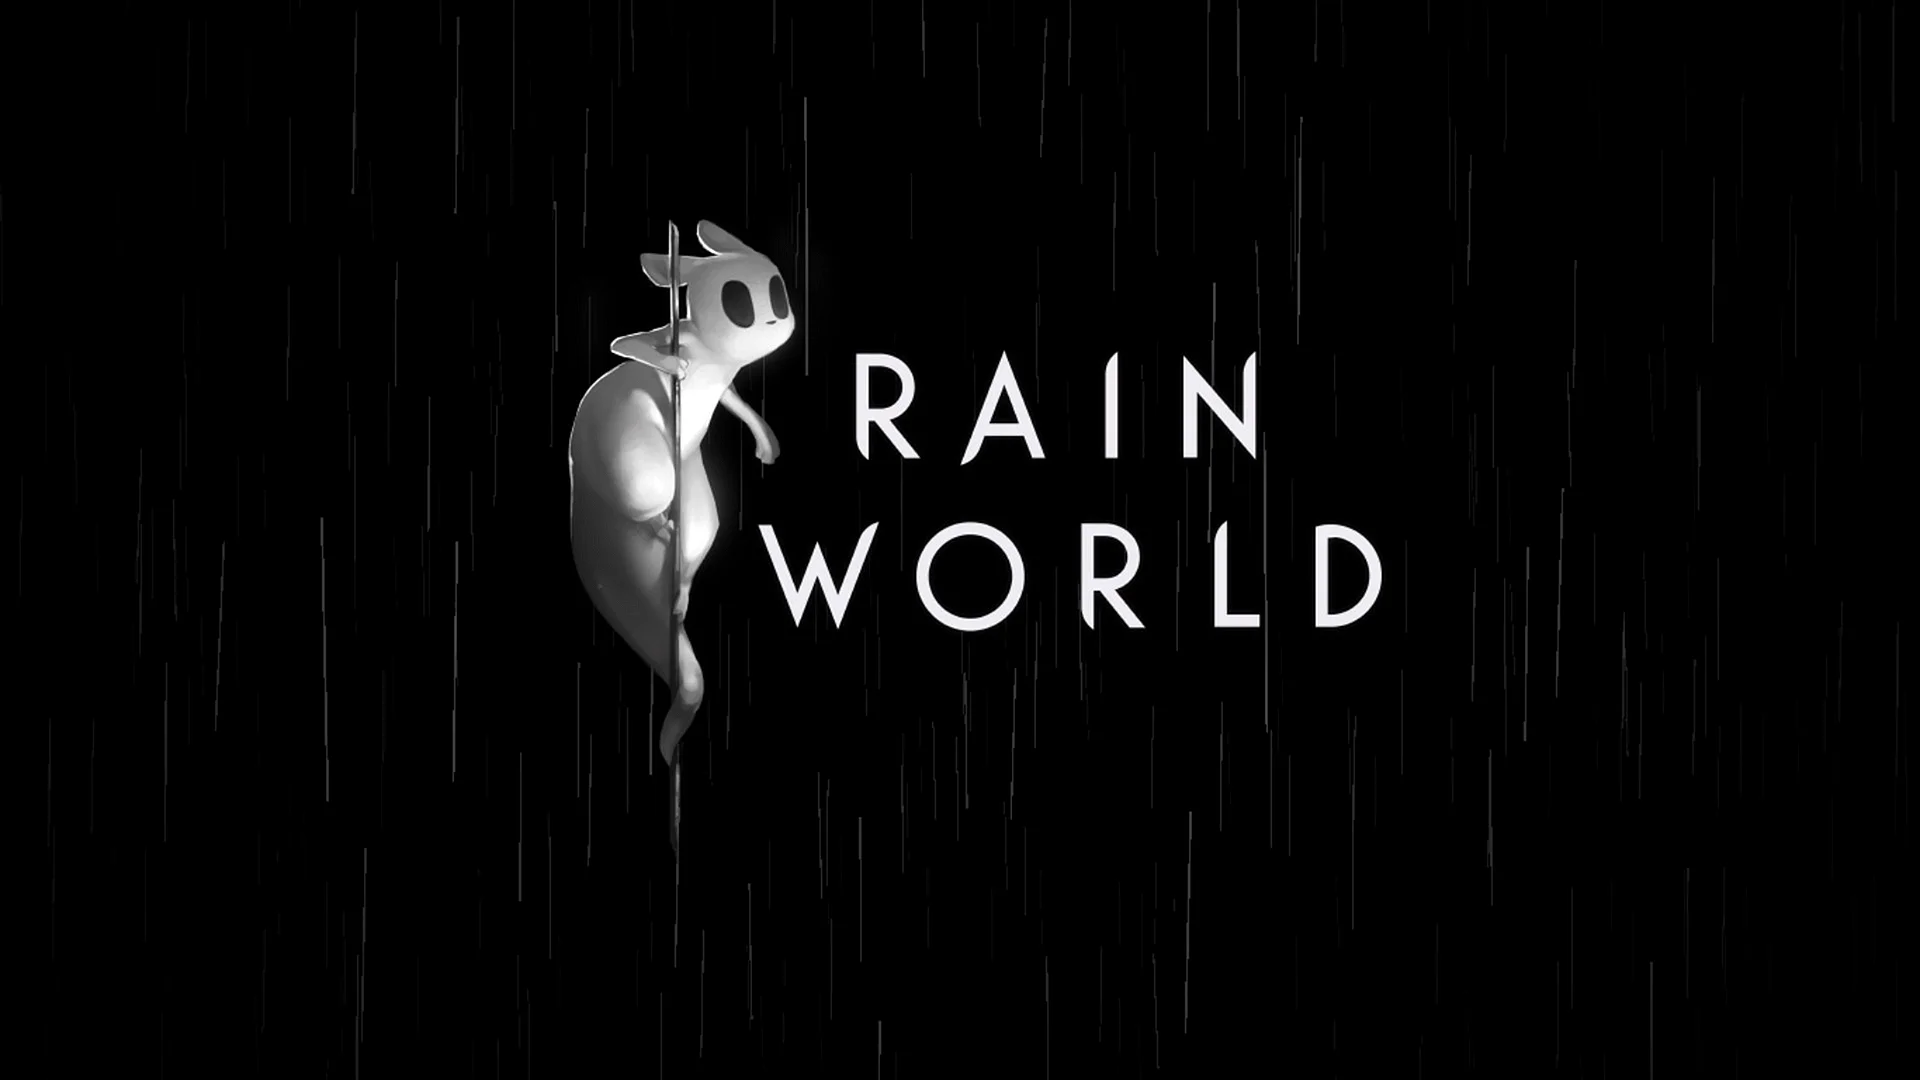 Rain World Wallpaper